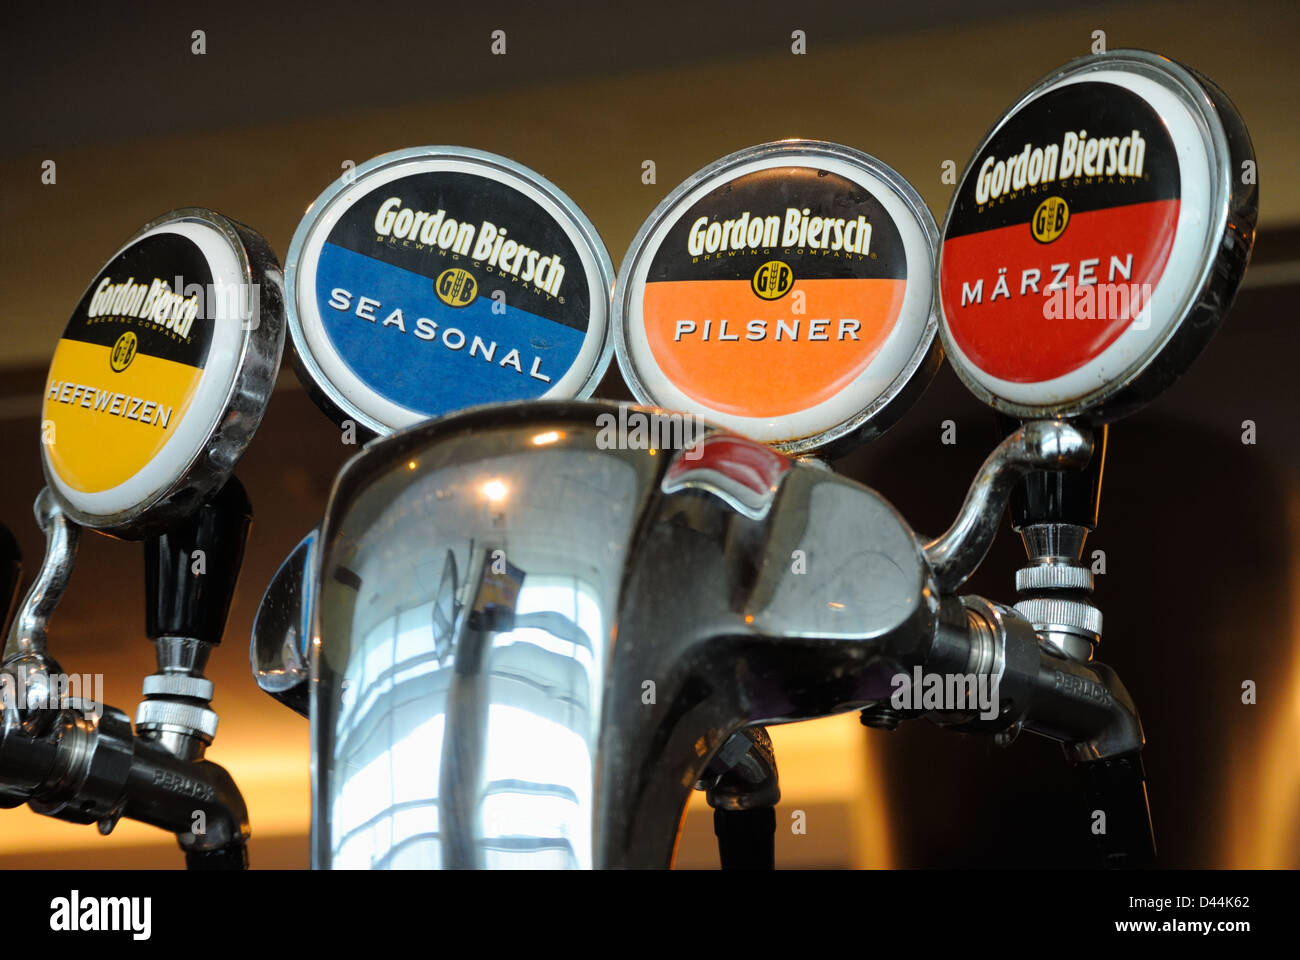 Gordon Biersch beer on tap, Mineta San Jose airport CA Stock Photo